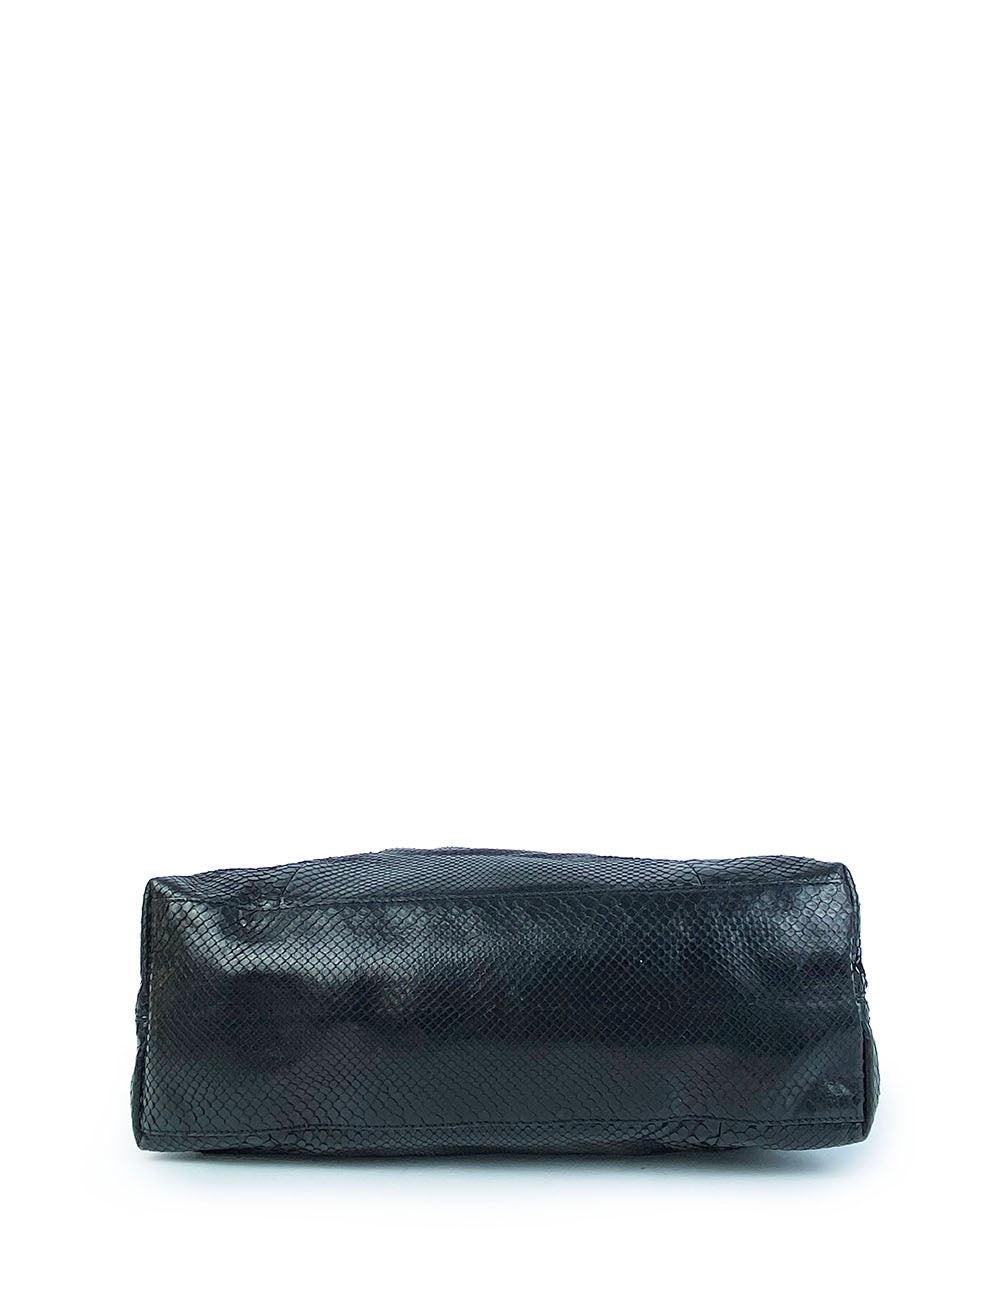 Women's Gucci Soho Chain Black Python Tote Bag